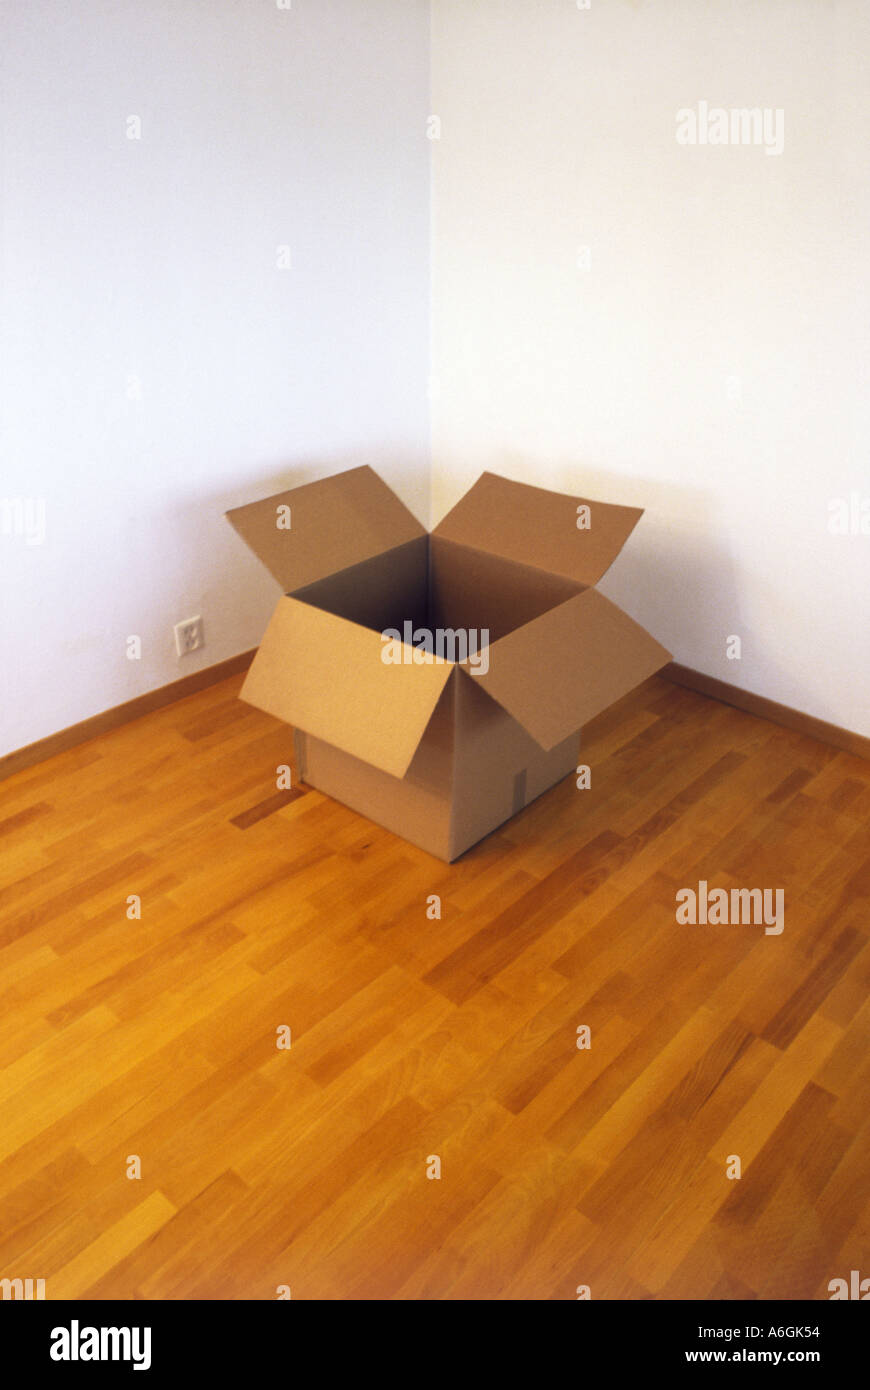 empty-cardboard-box-in-the-corner-of-a-room-A6GK54.jpg